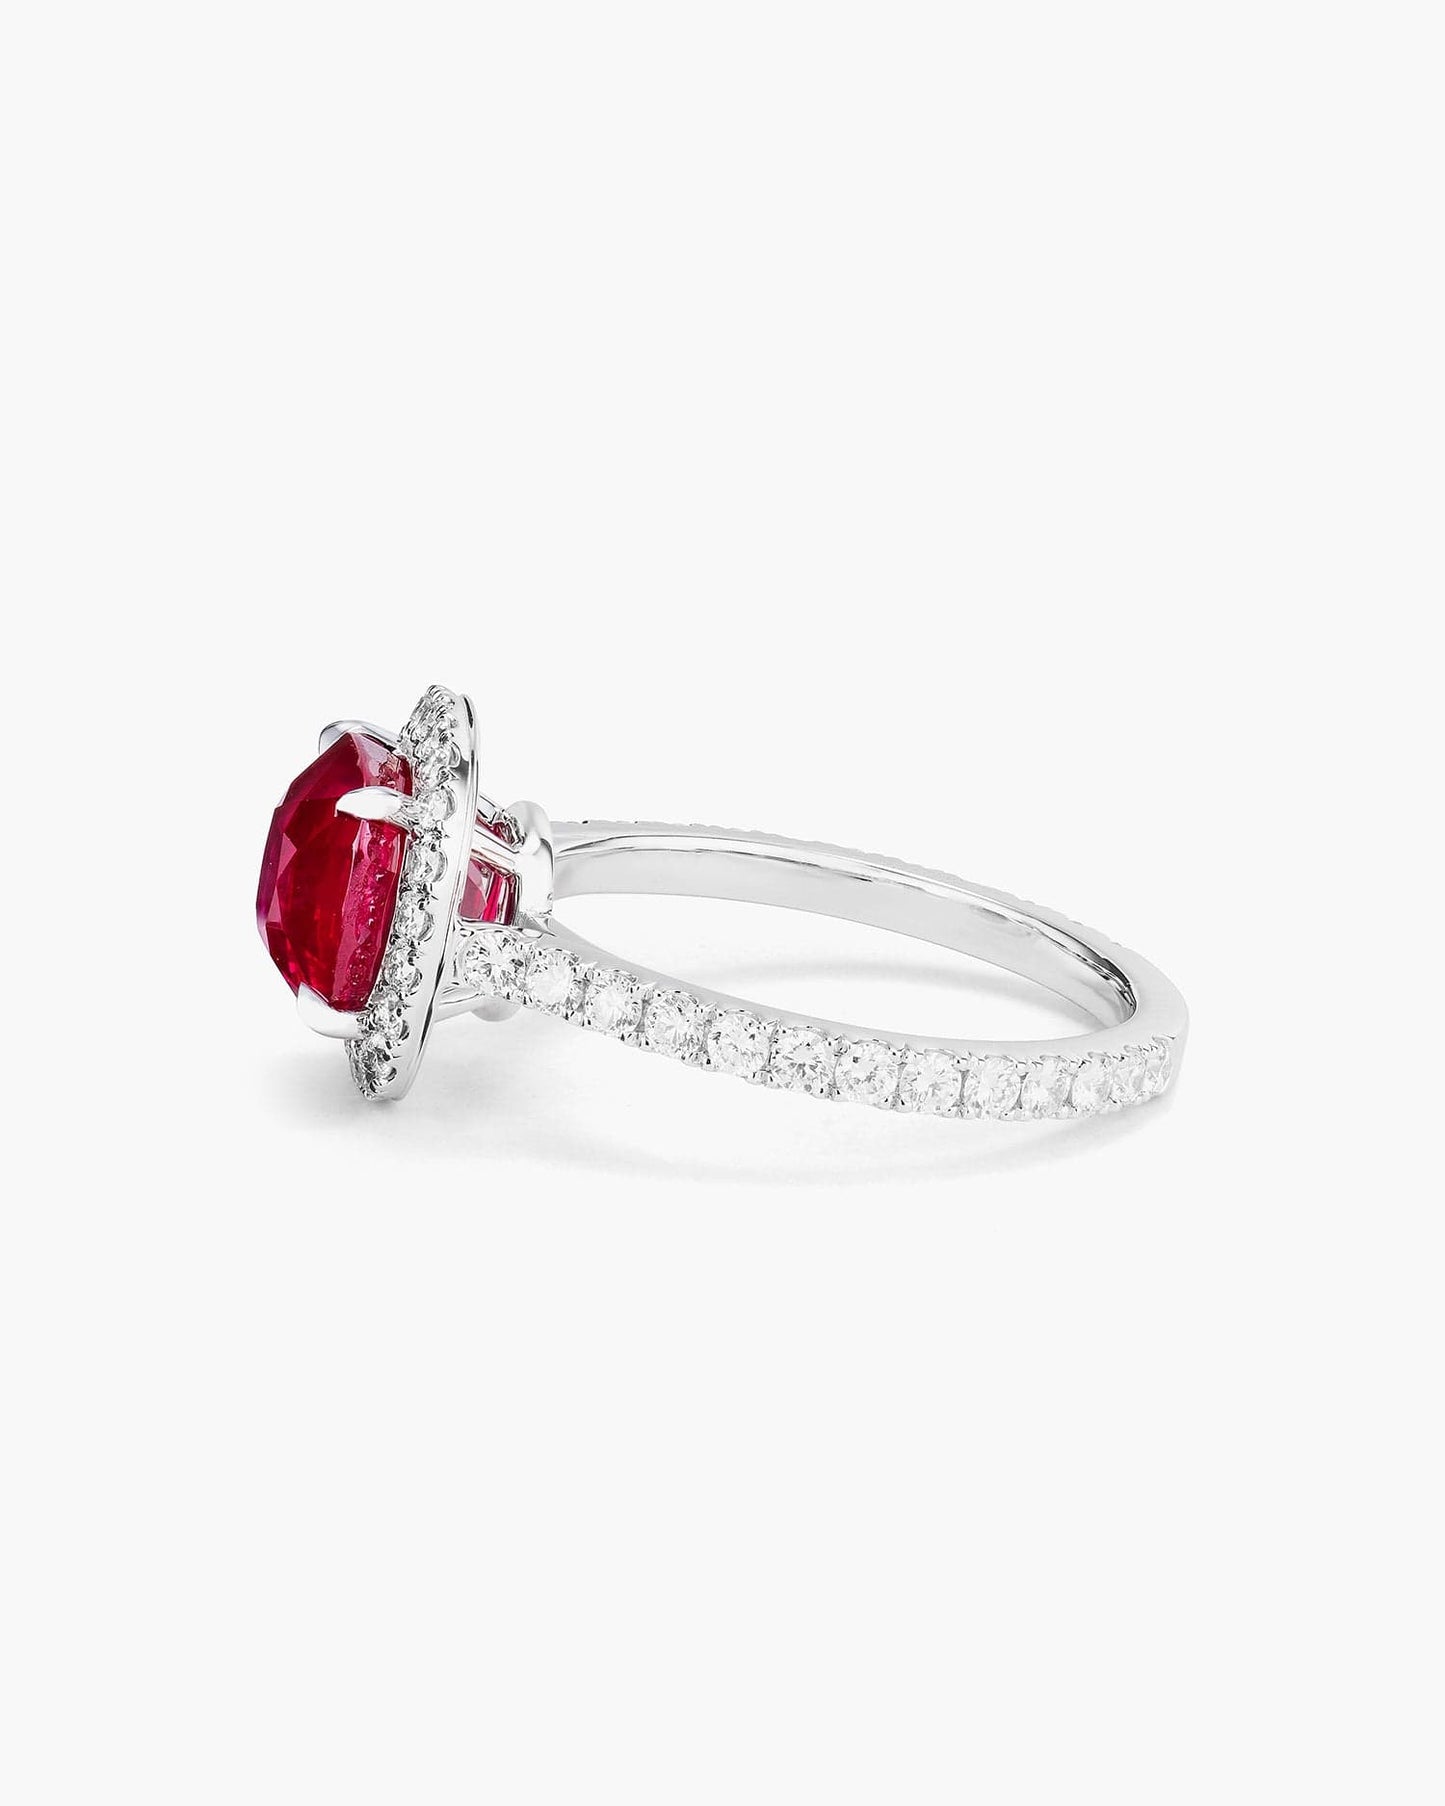 3.02 carat Cushion Cut Burmese Ruby and Diamond Ring